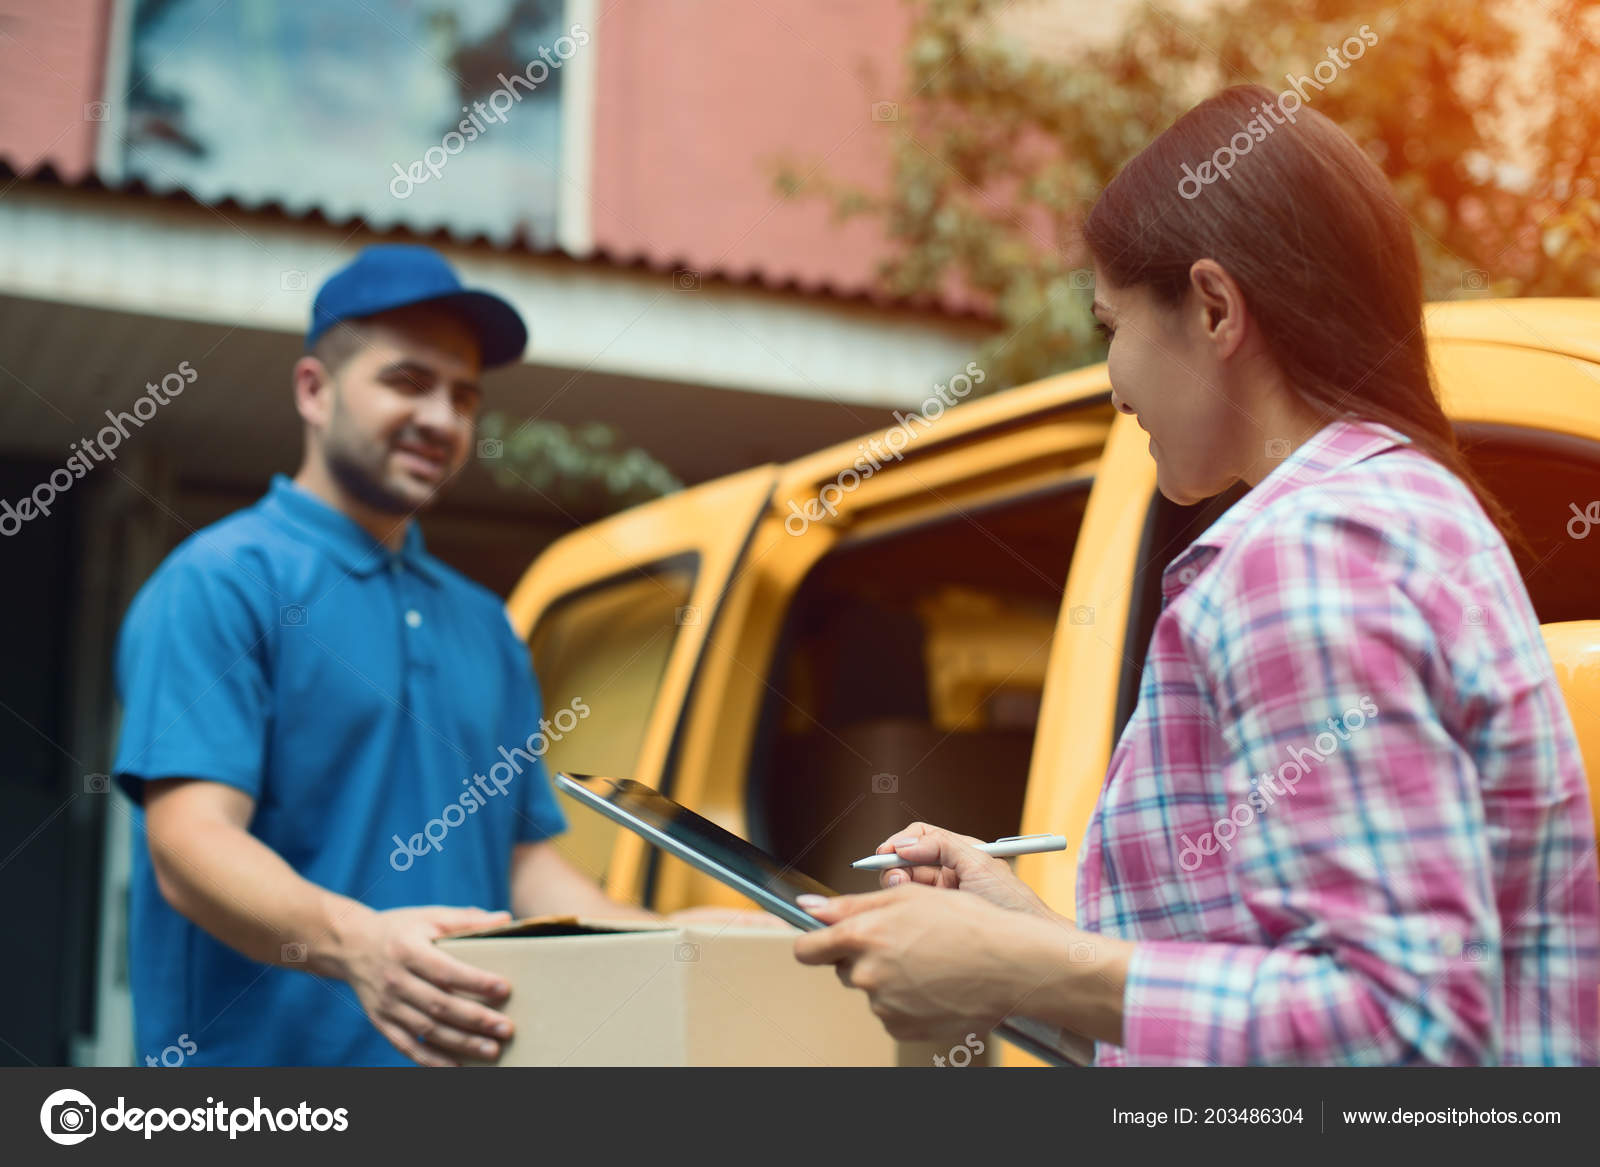 https://st4.depositphotos.com/1001030/20348/i/1600/depositphotos_203486304-stock-photo-delivery-man-handing-package-box.jpg